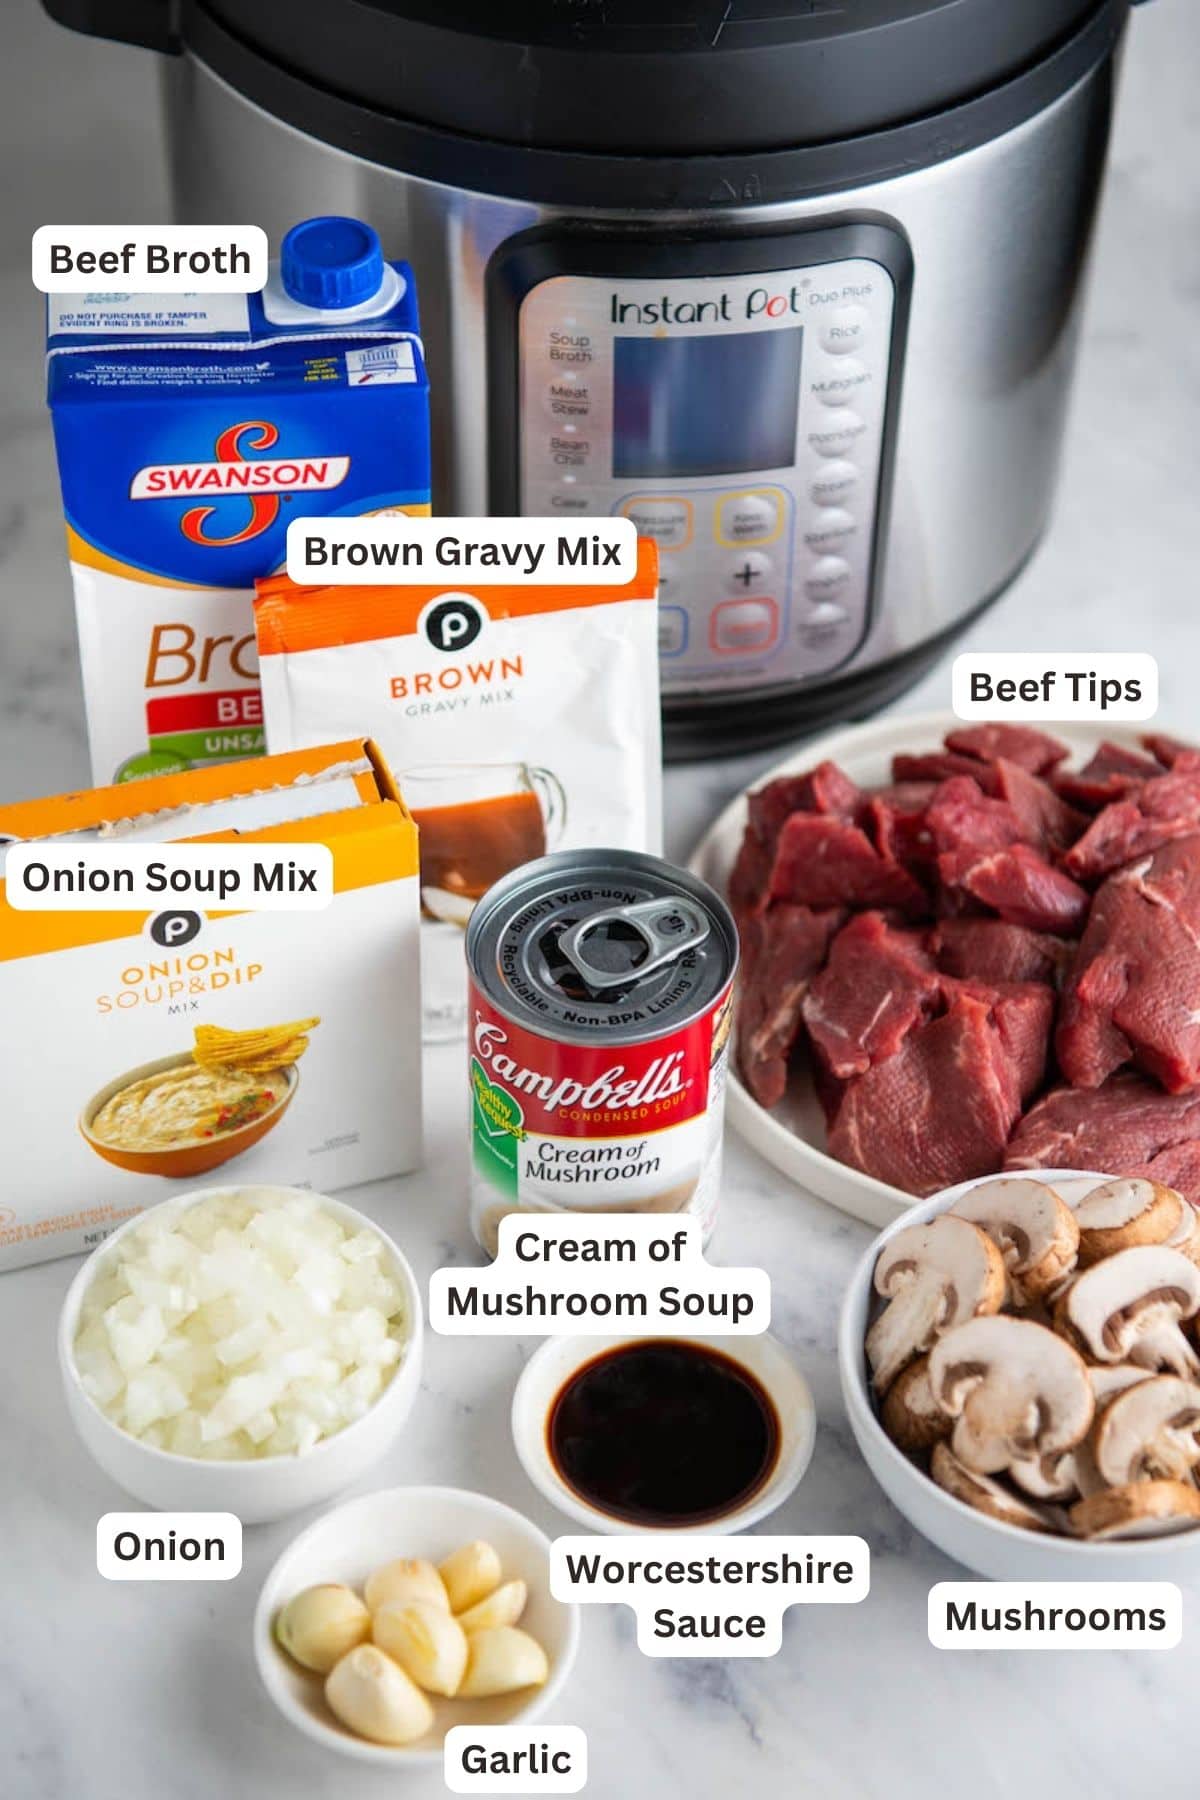 Ingredients for Instant Pot Beef Tips.